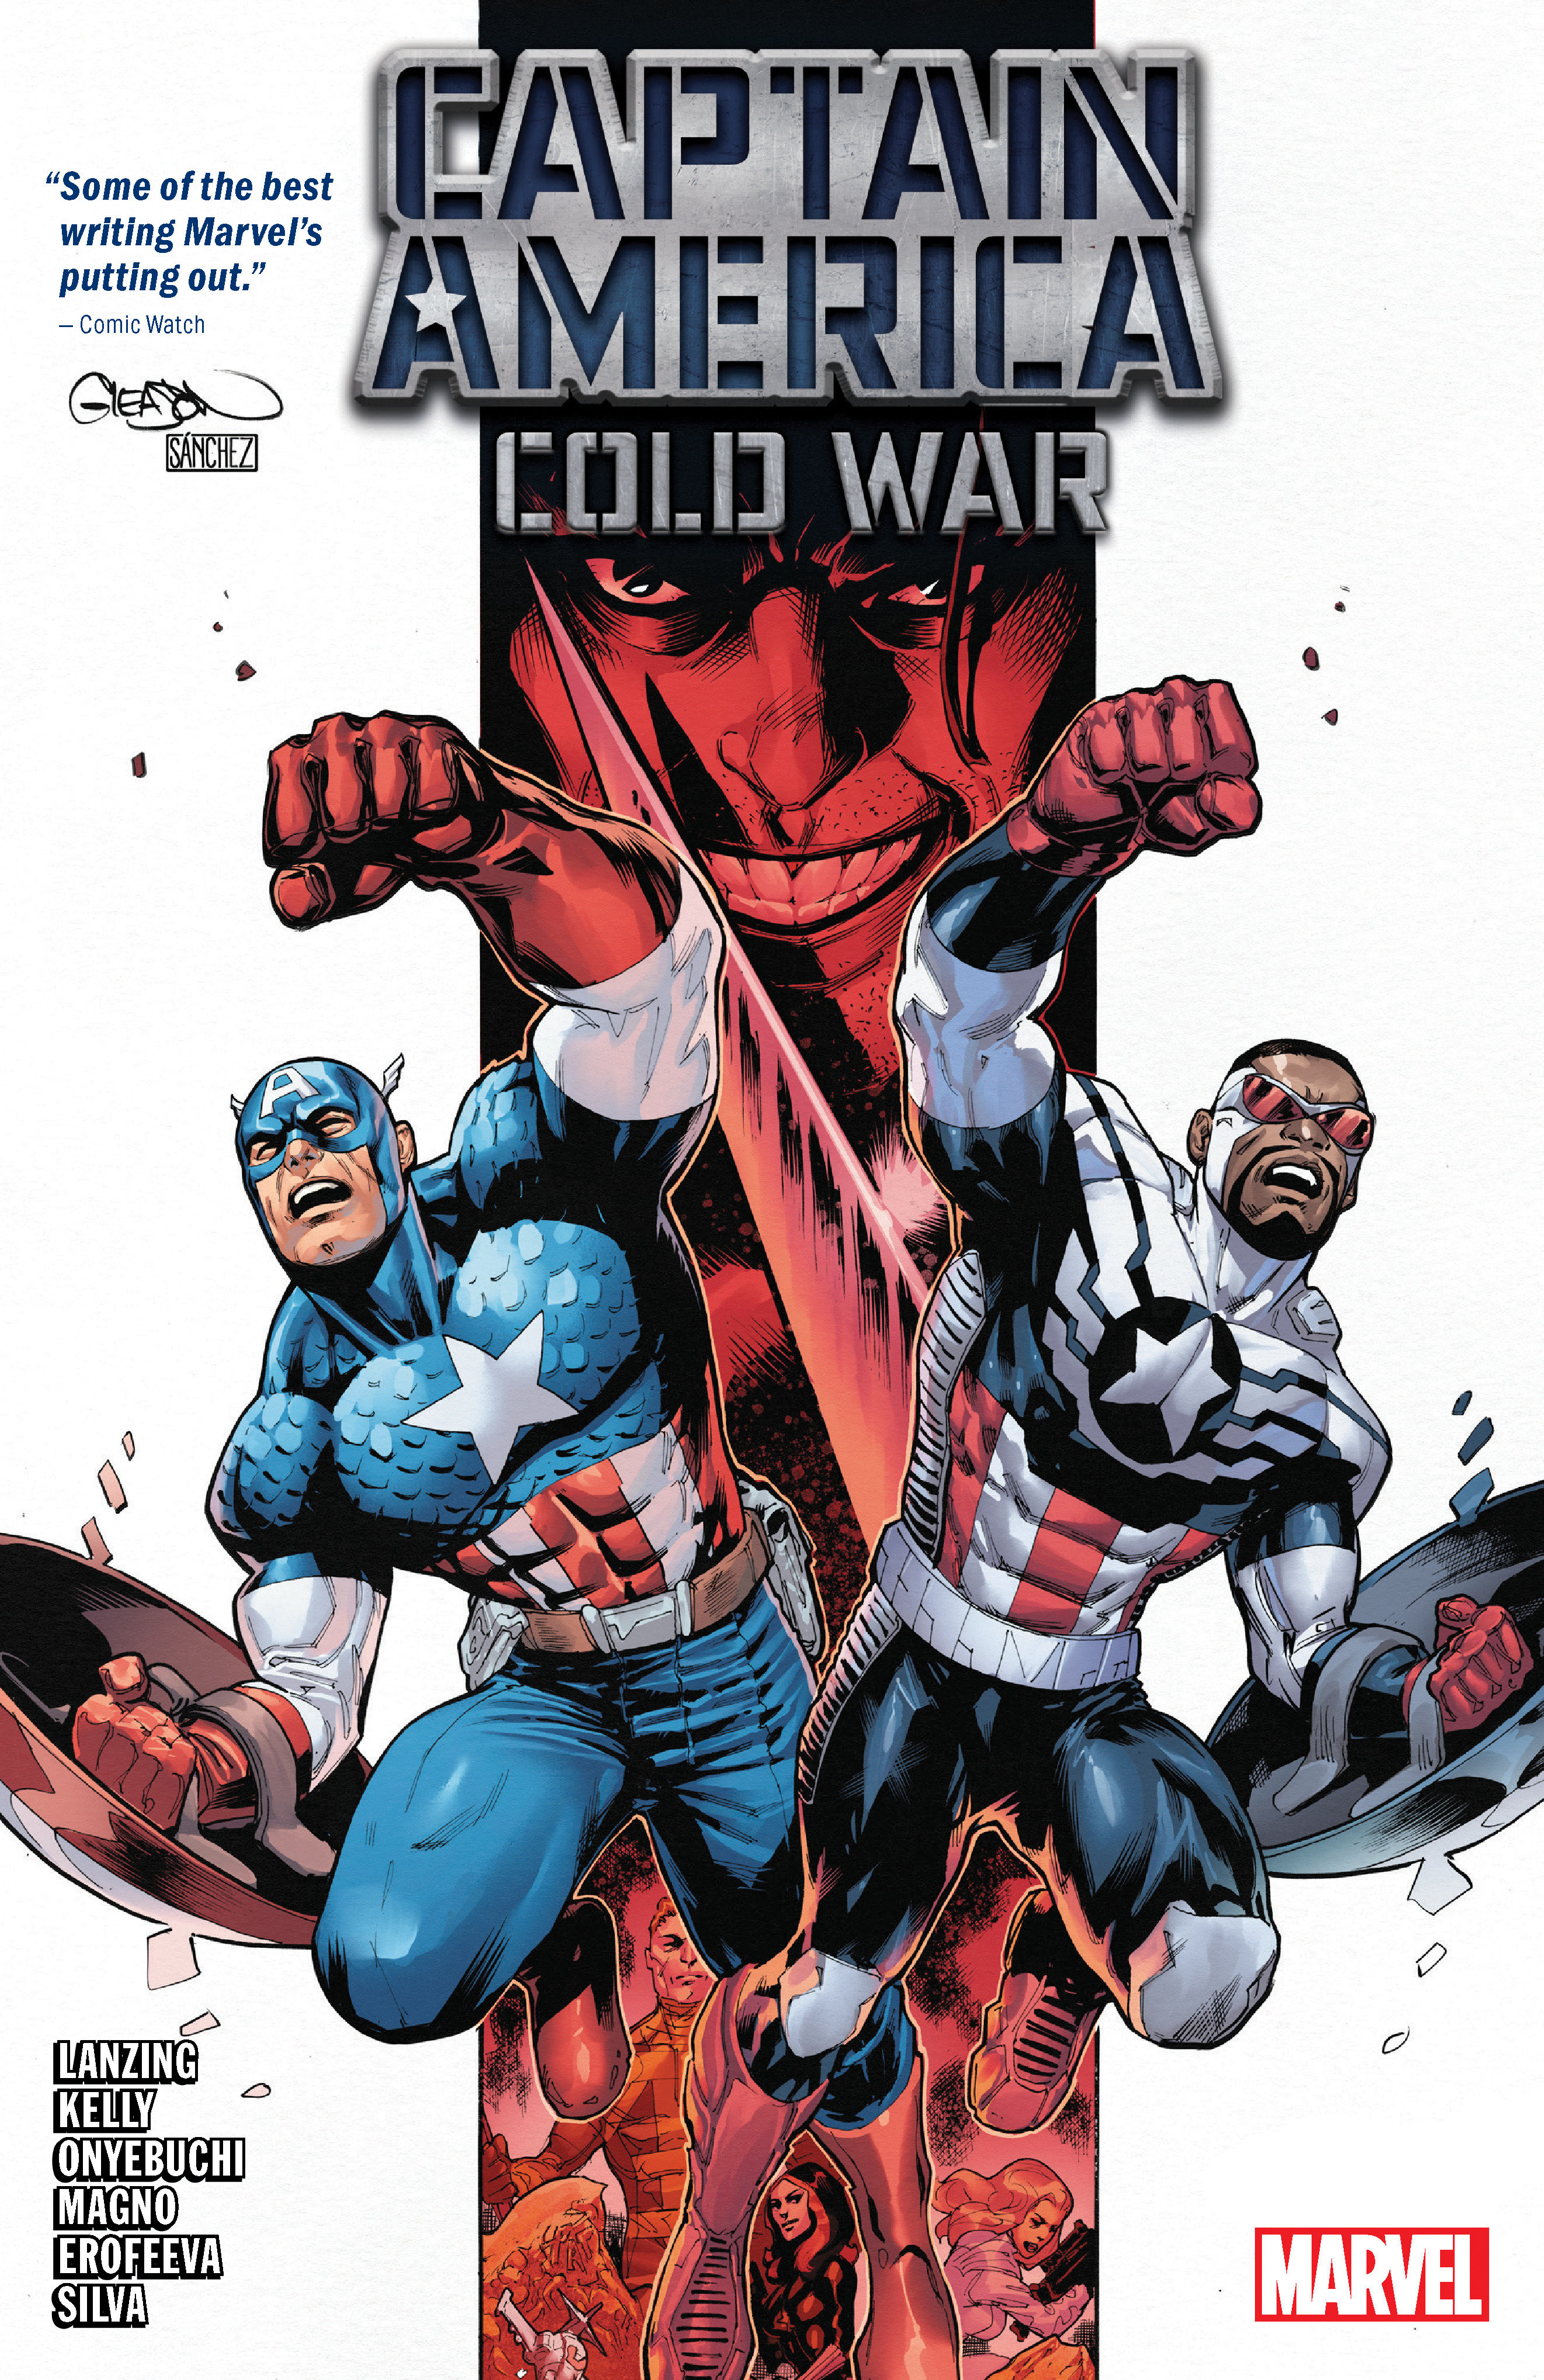 Captain America Graphic Novel Cold War